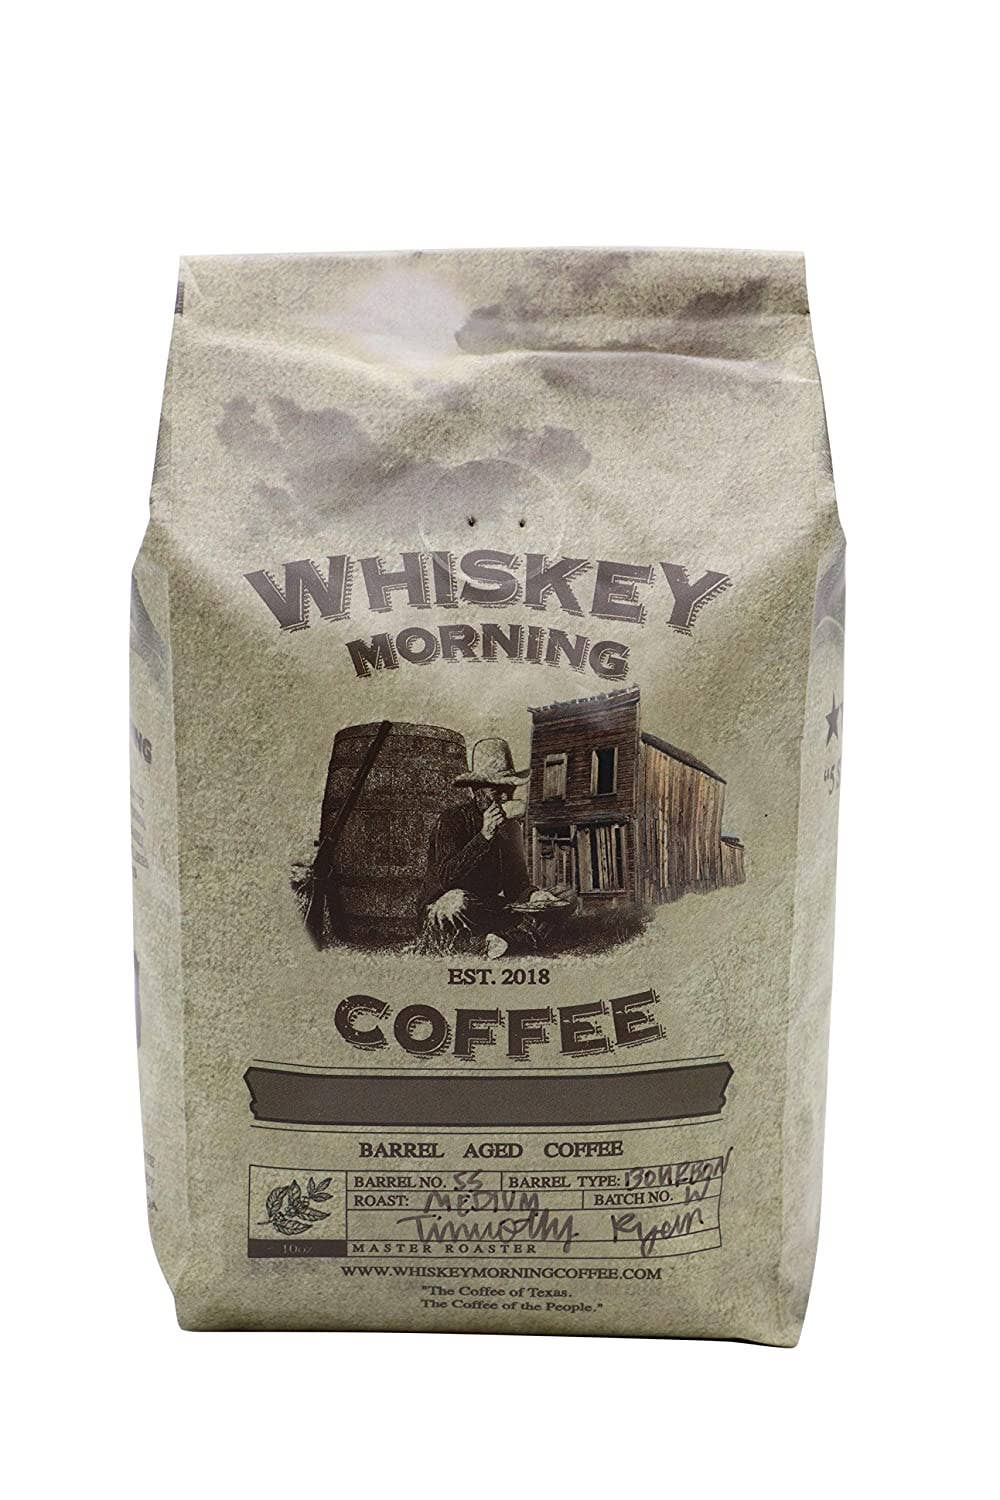 Whiskey Morning Coffee - Barrel Aged Coffee